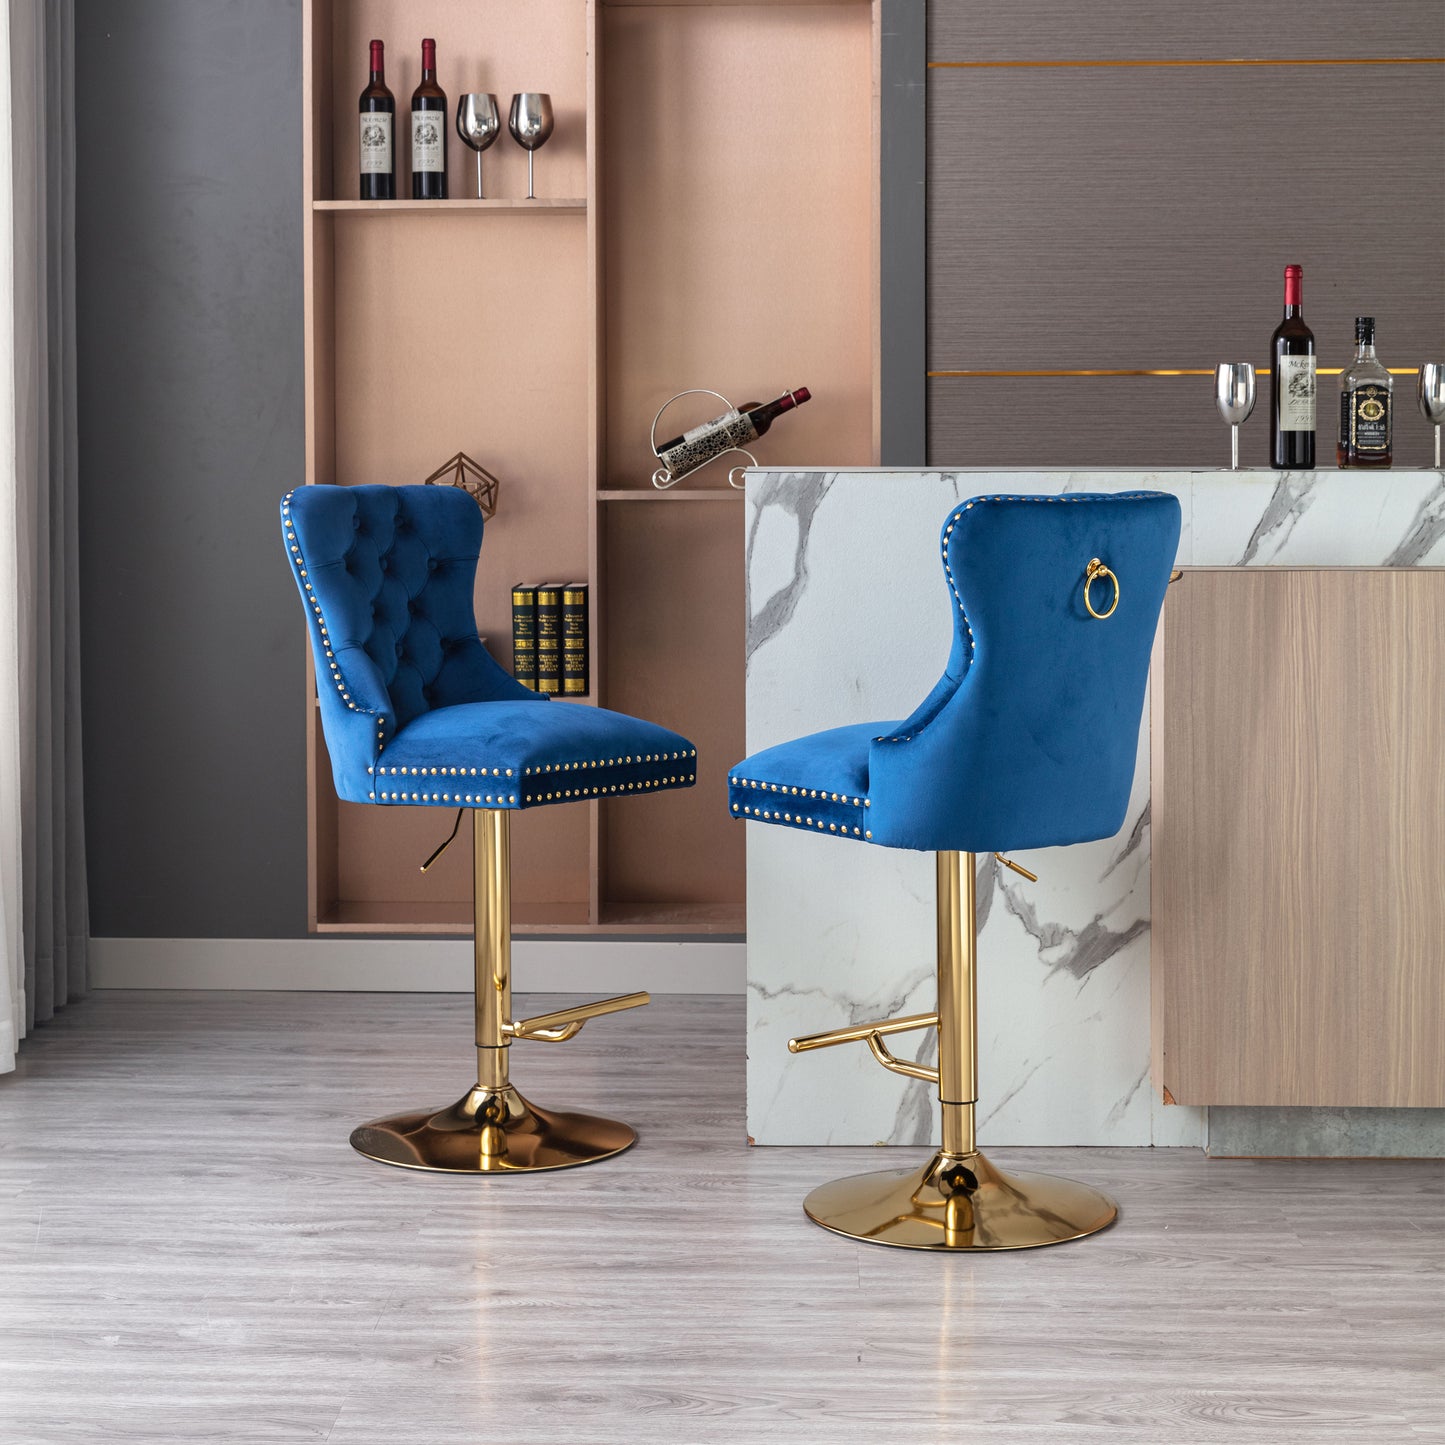 Swivel Bar Stools Chair Set of 2 Modern Adjustable Counter Height Bar Stools, Velvet